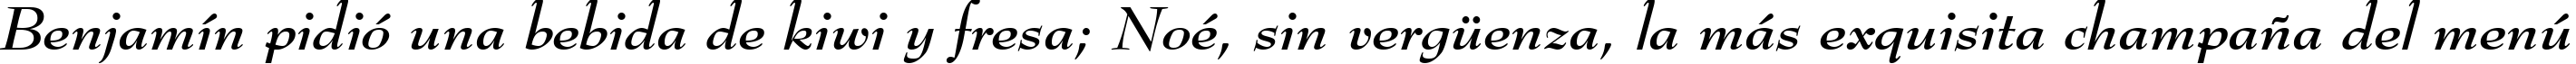 Пример написания шрифтом BernhardMod BT Bold Italic текста на испанском